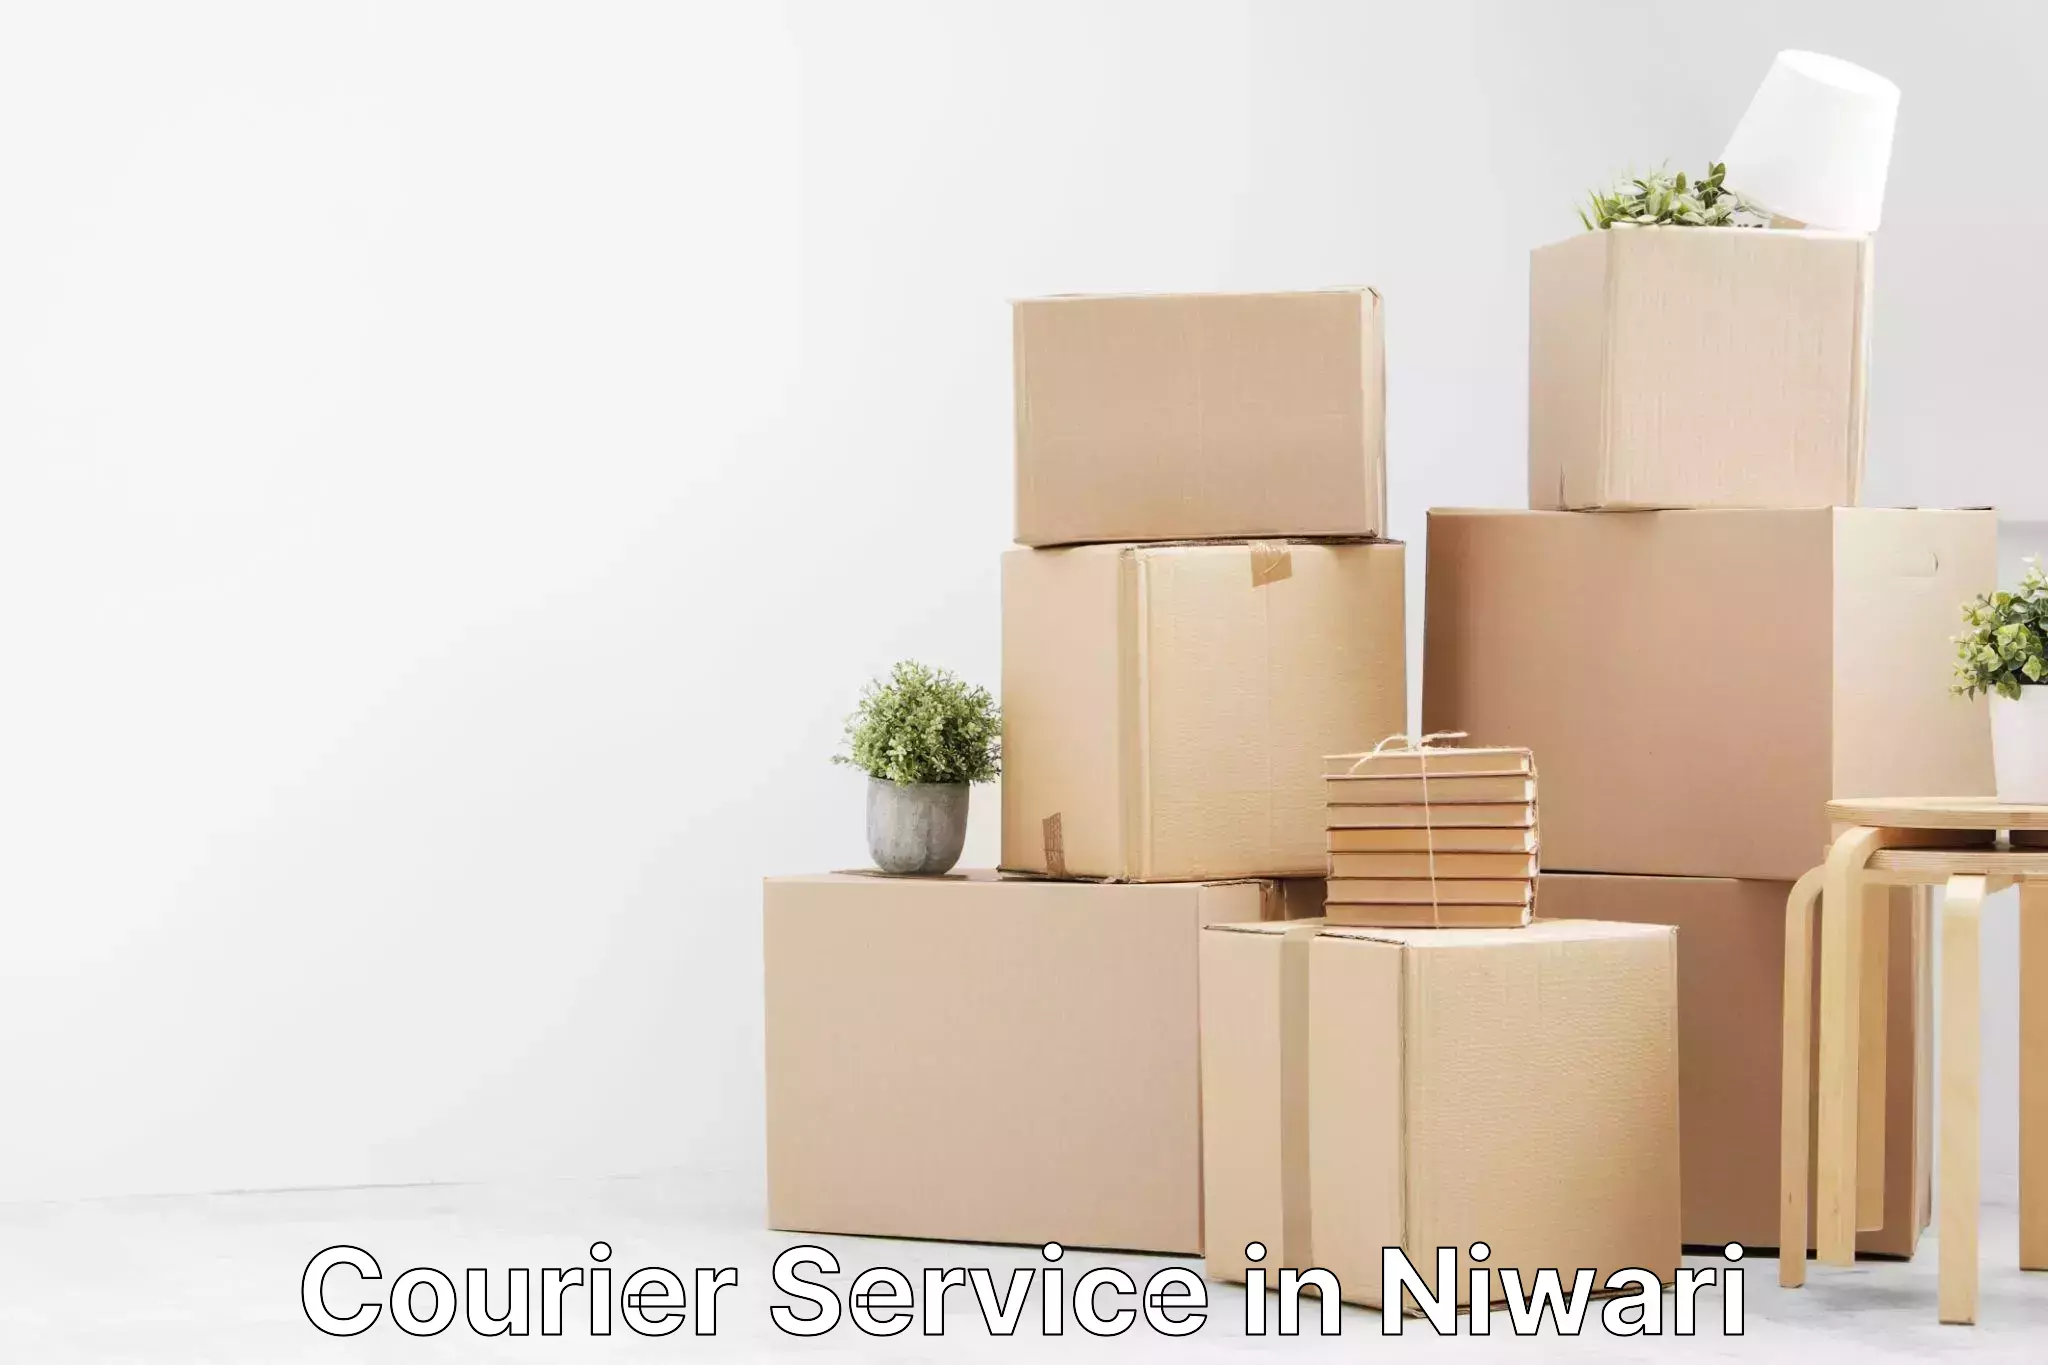 Fastest parcel delivery in Niwari